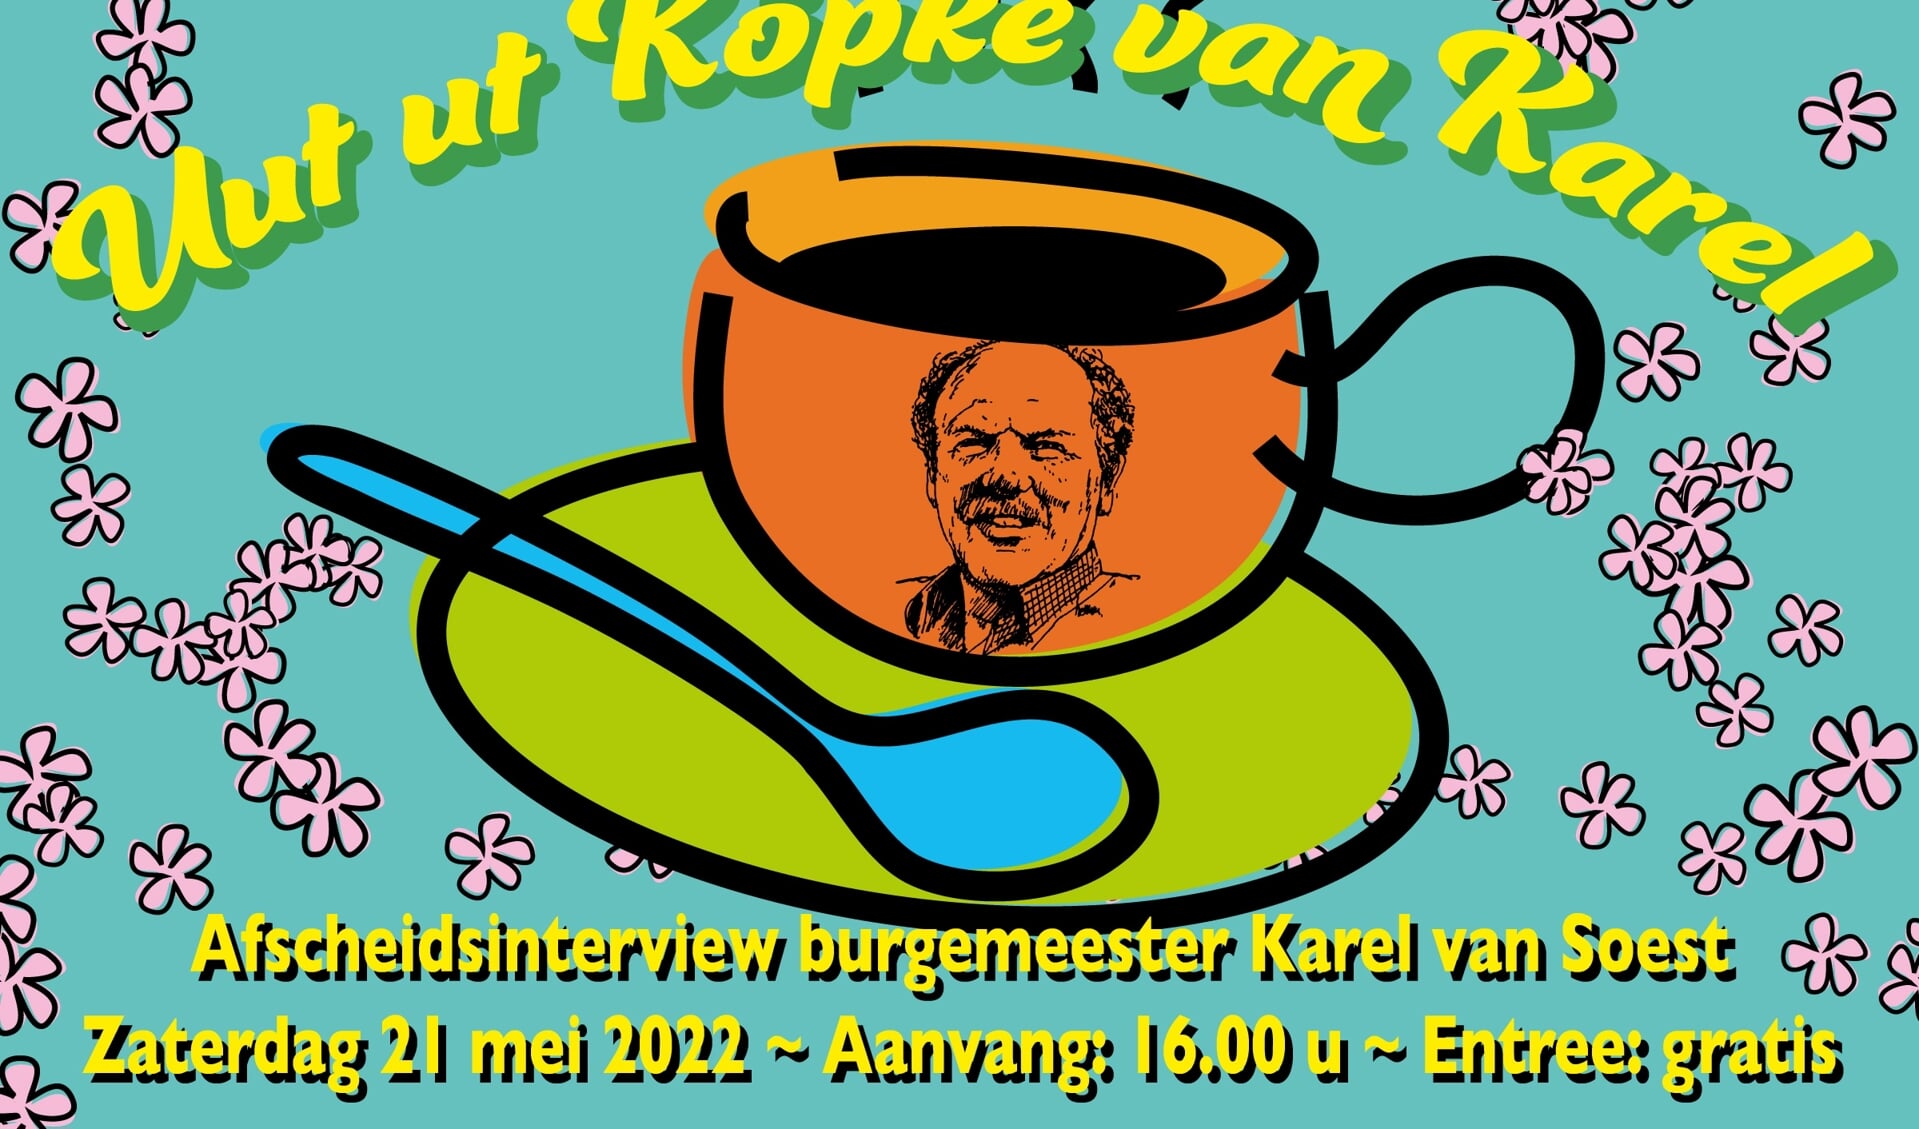 talkshow > Uut ut Köpke van Karel